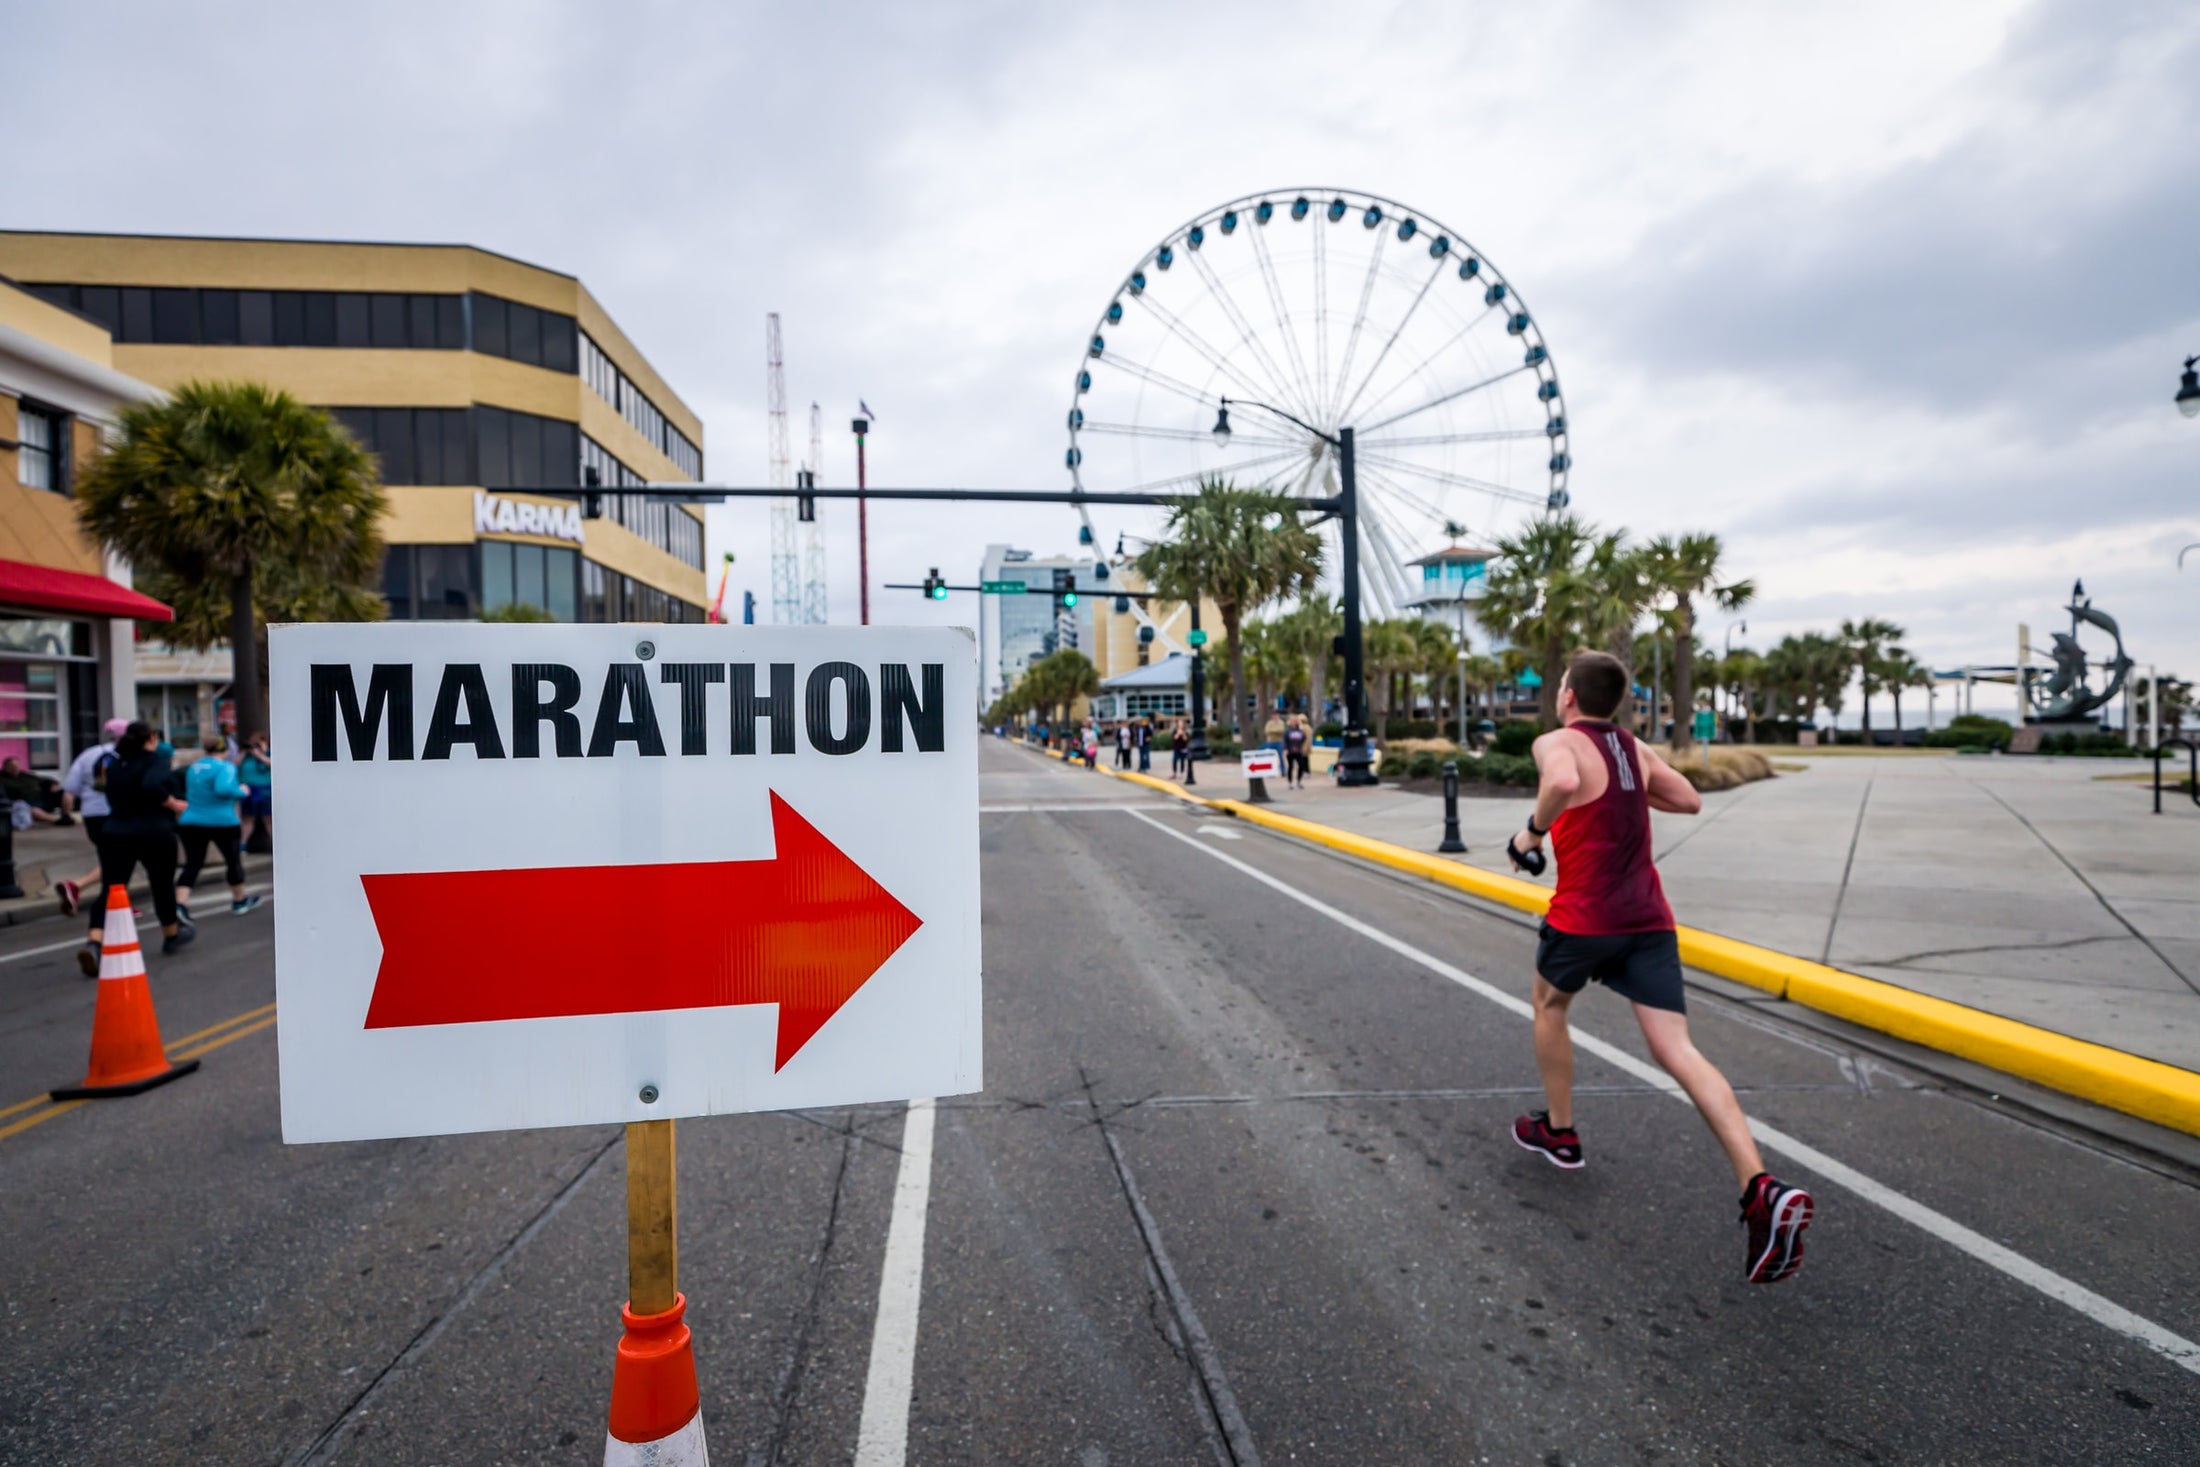 What marathons can I run to qualify for the Boston Marathon? 26.2